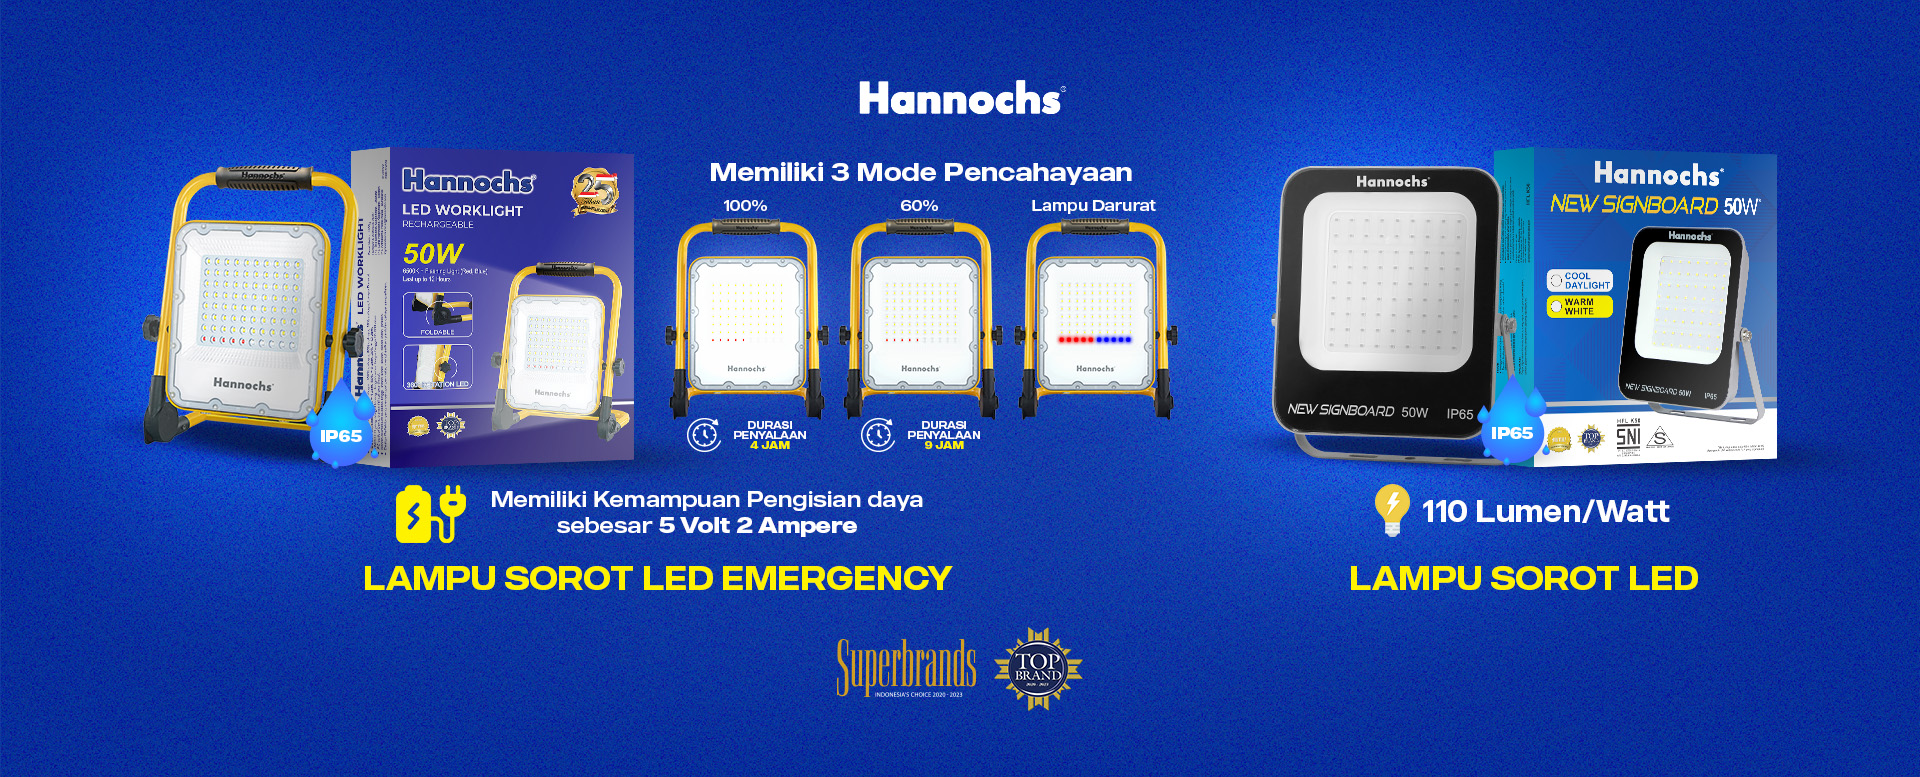 Hannochs LED Floodlight